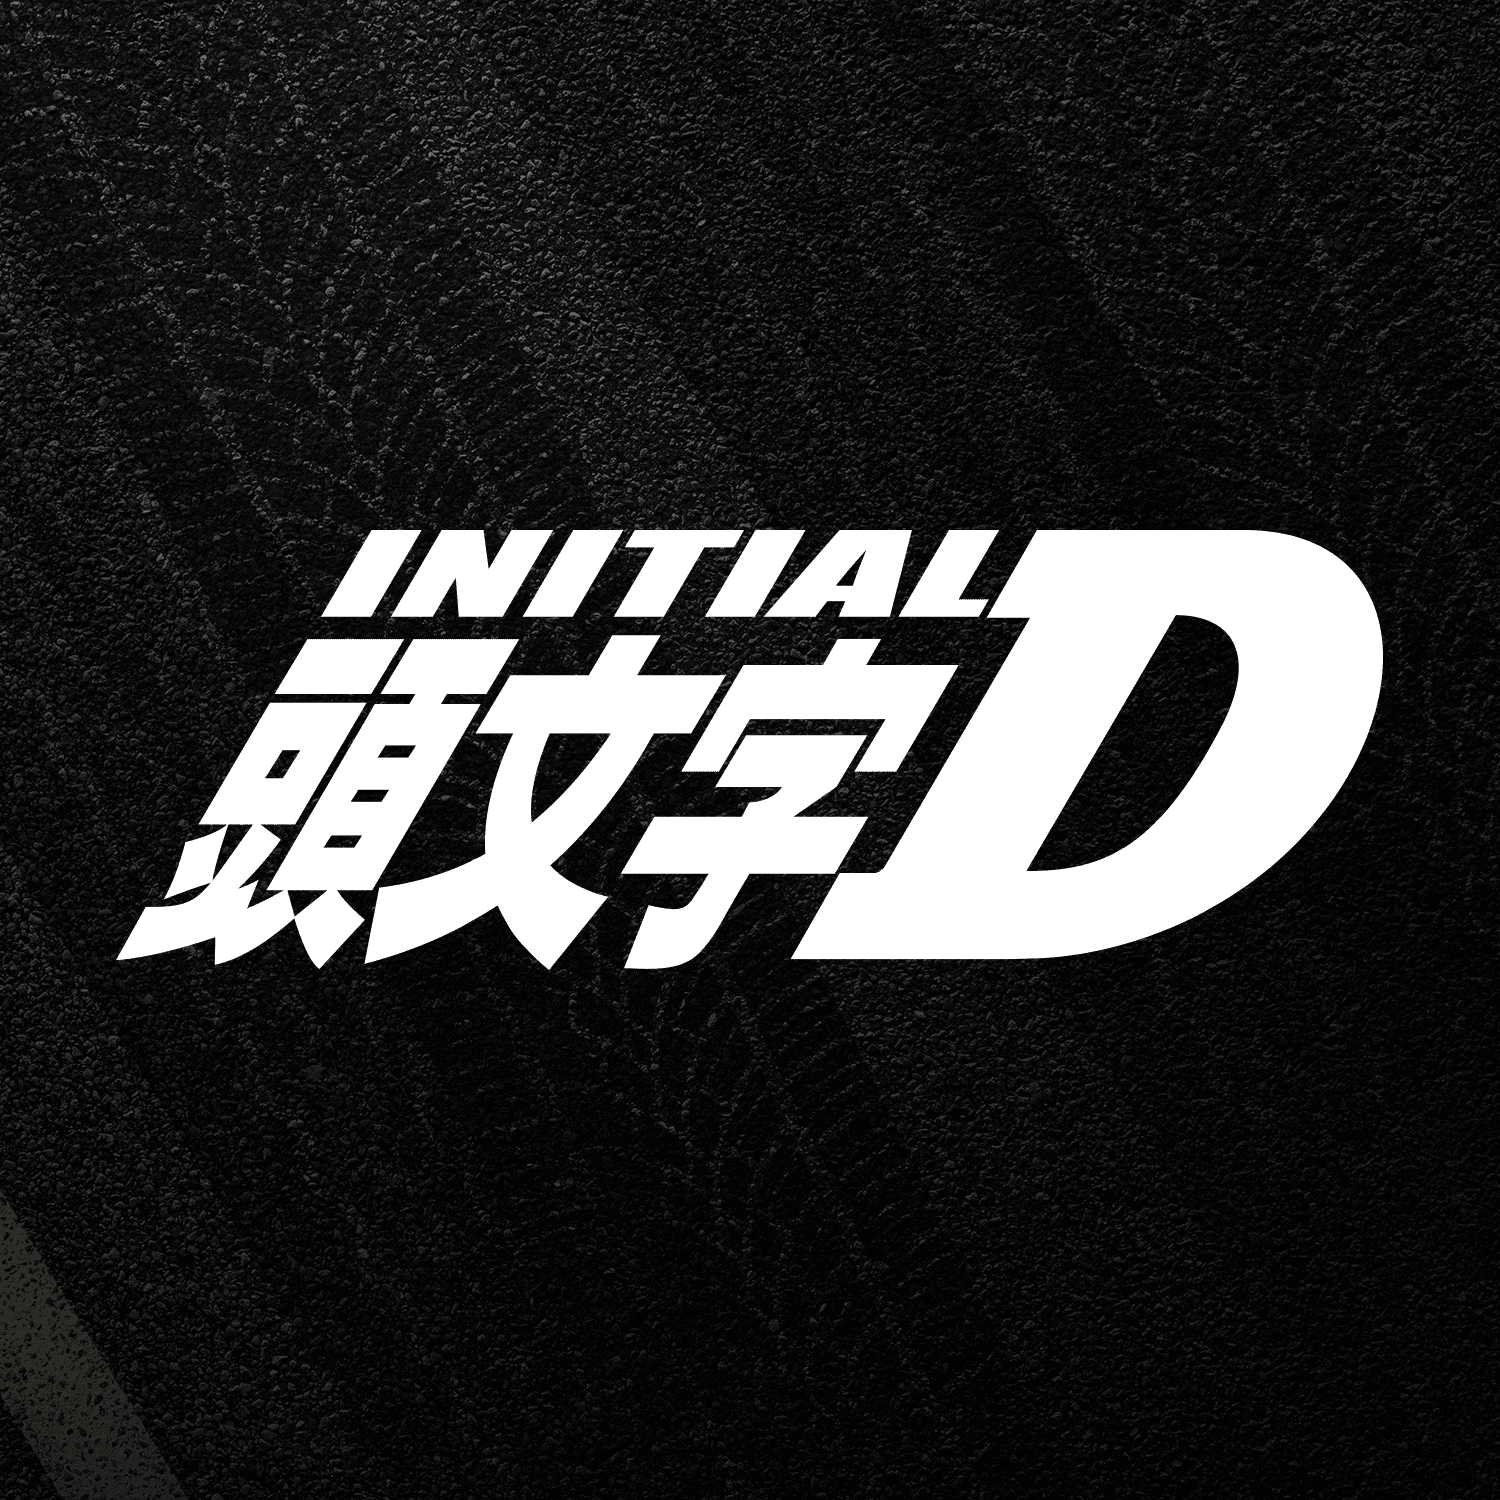 Japanese Black and White Logo - INITIAL D Sticker JDM Logo Decal Japanese Decal Drift Car Vinyl